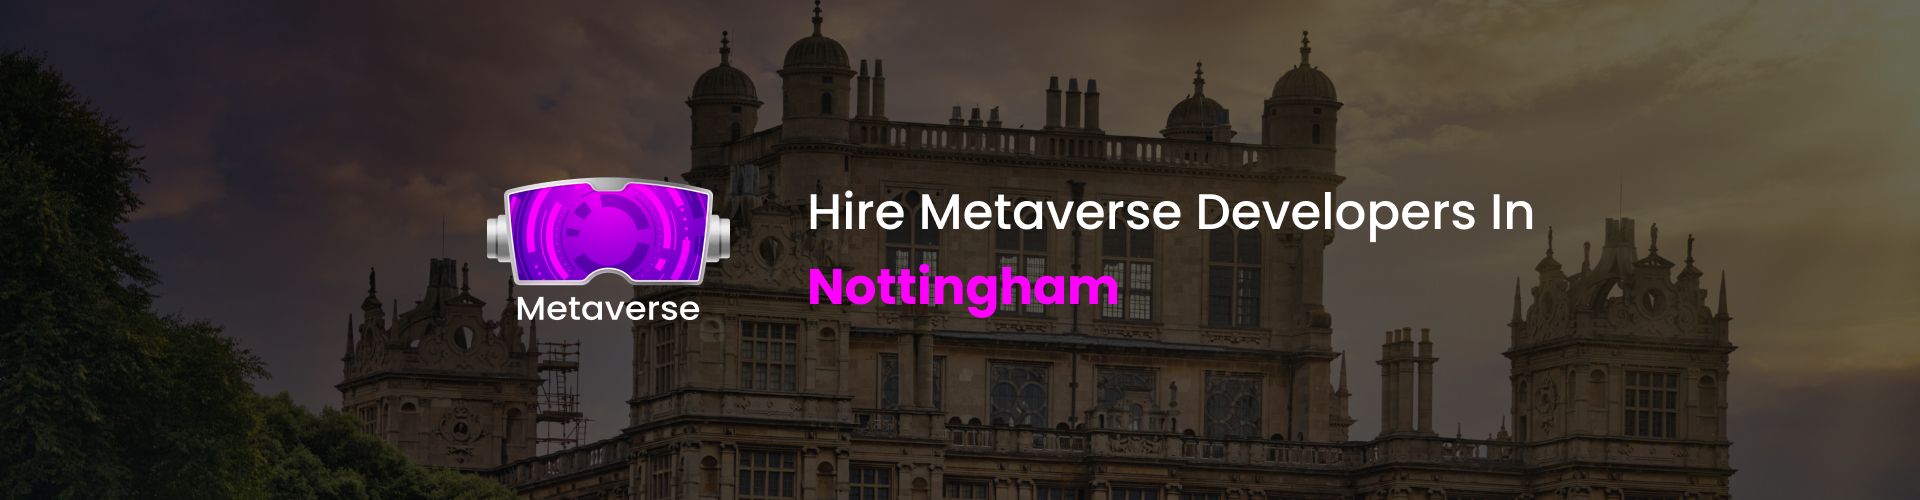 hire metaverse developers nottingham